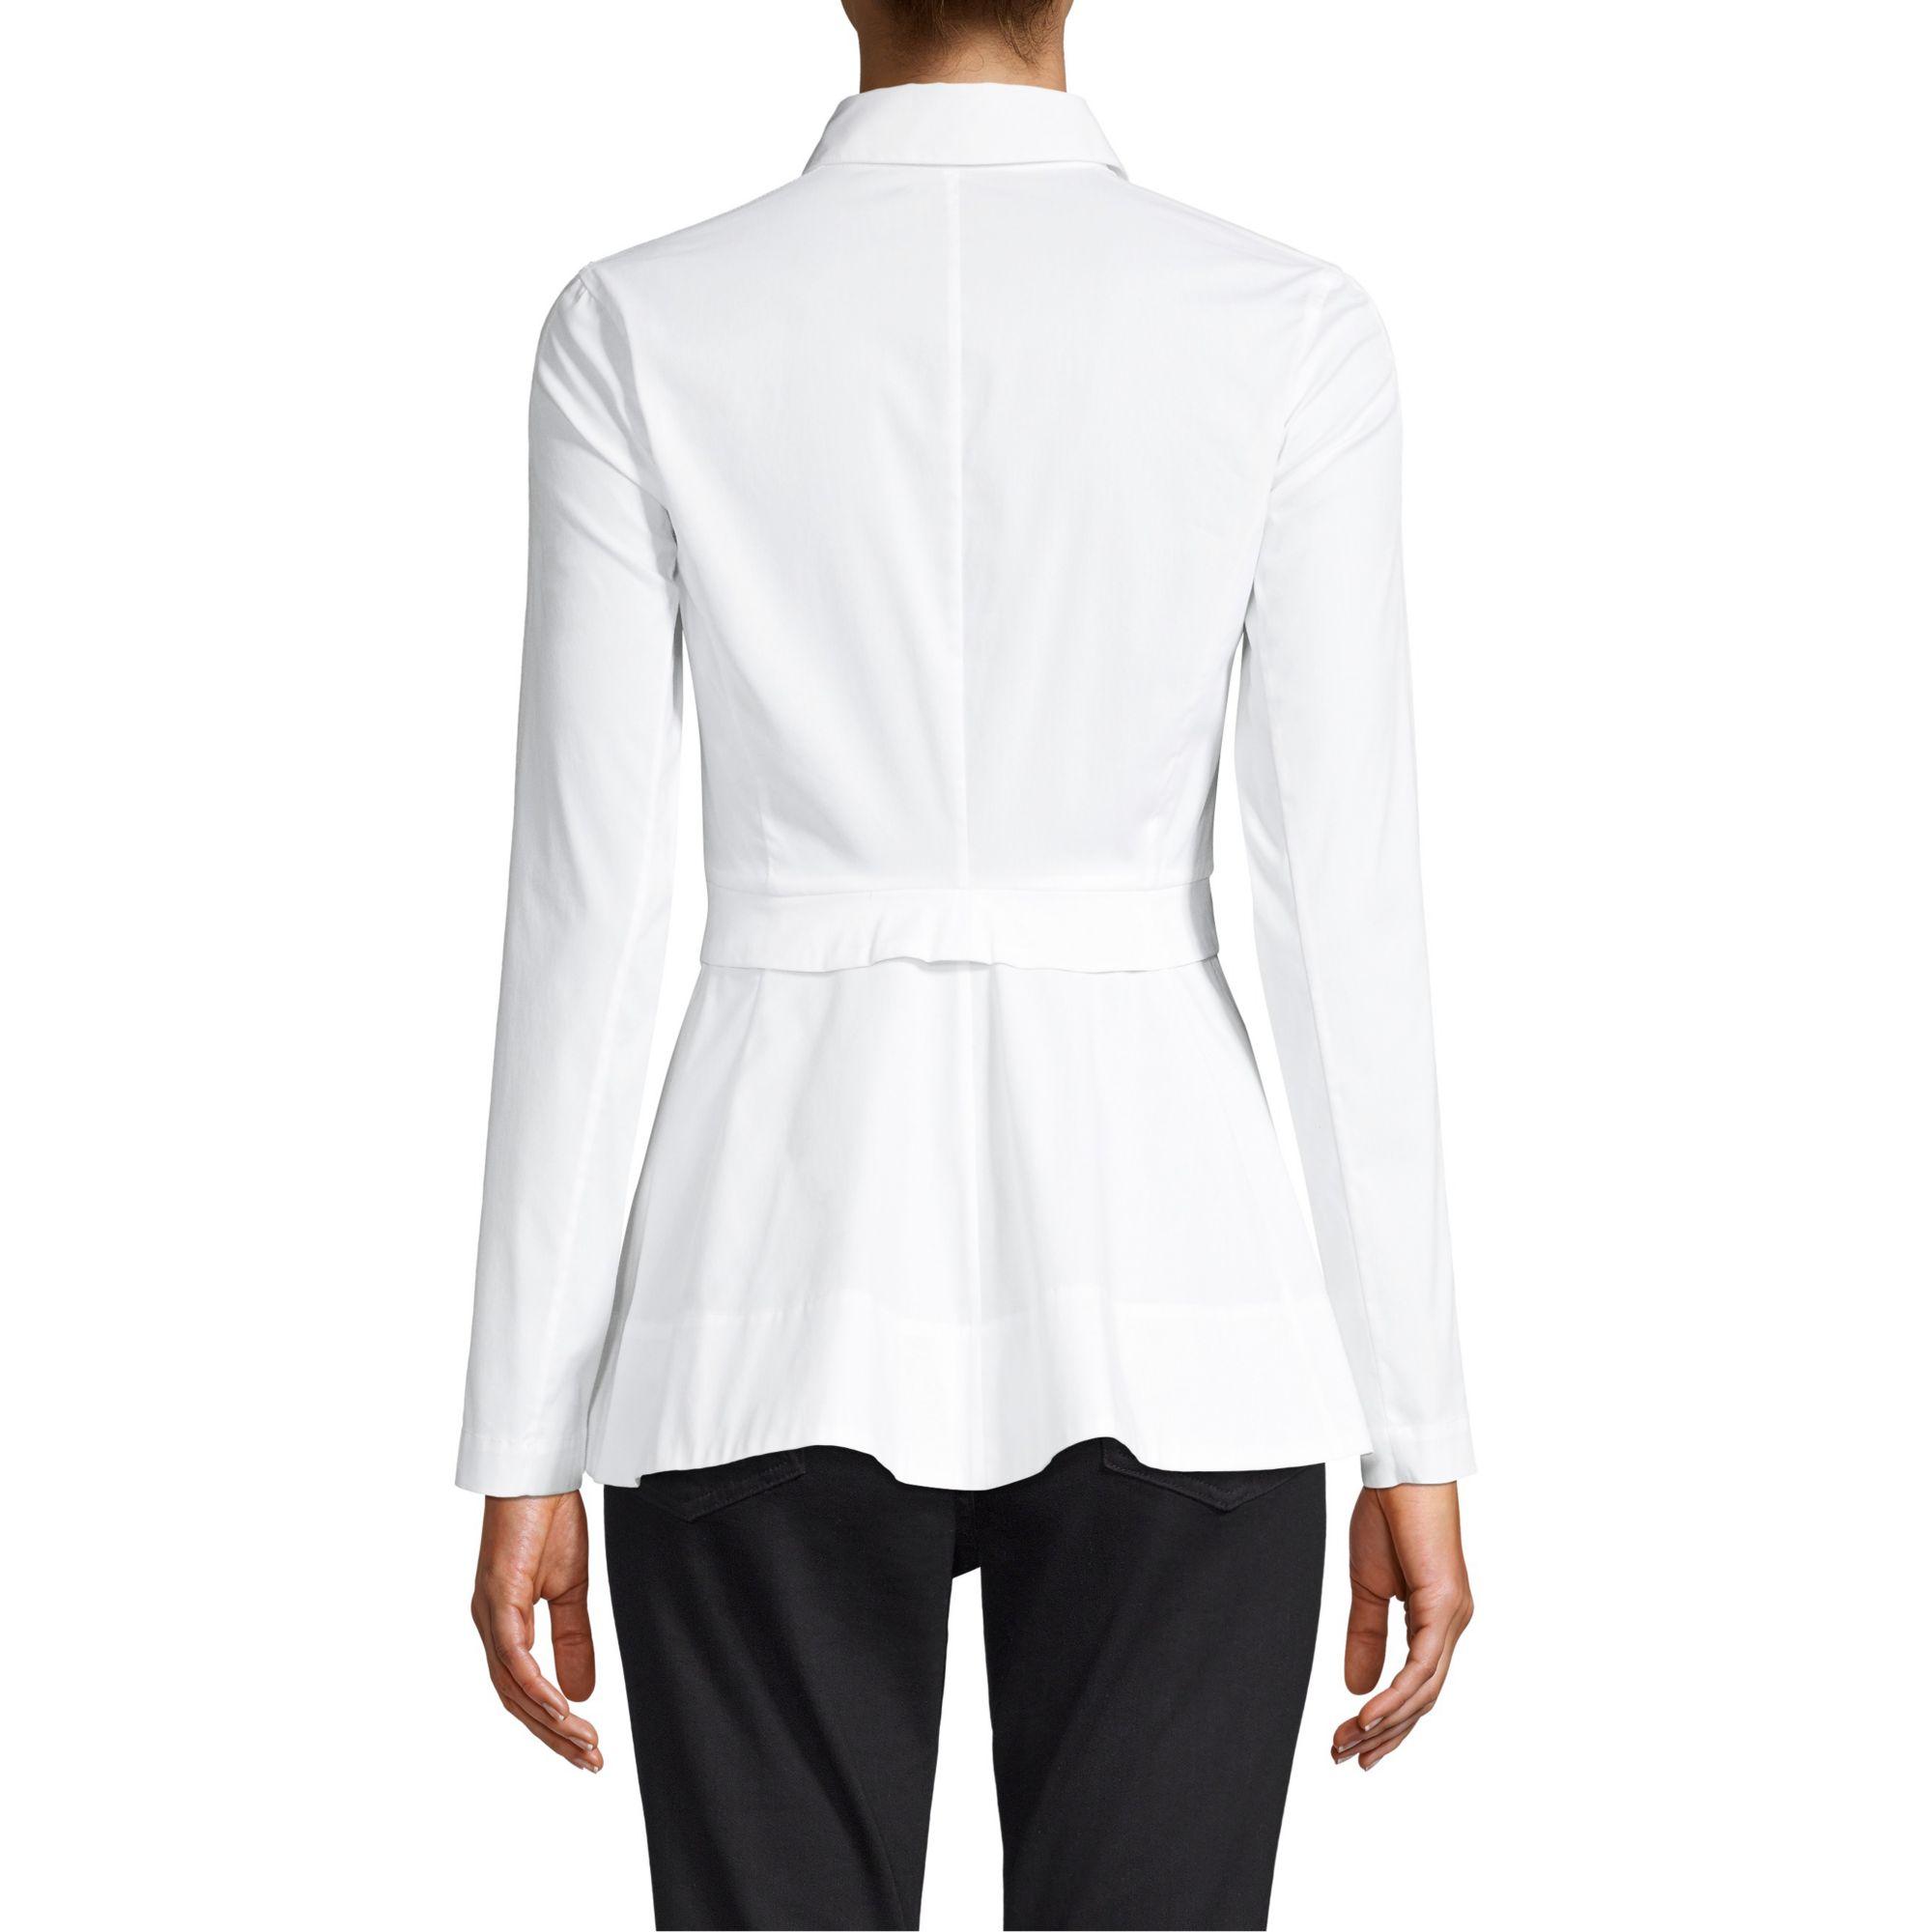 Donna Karan Cotton Peplum Dress Shirt in White - Lyst